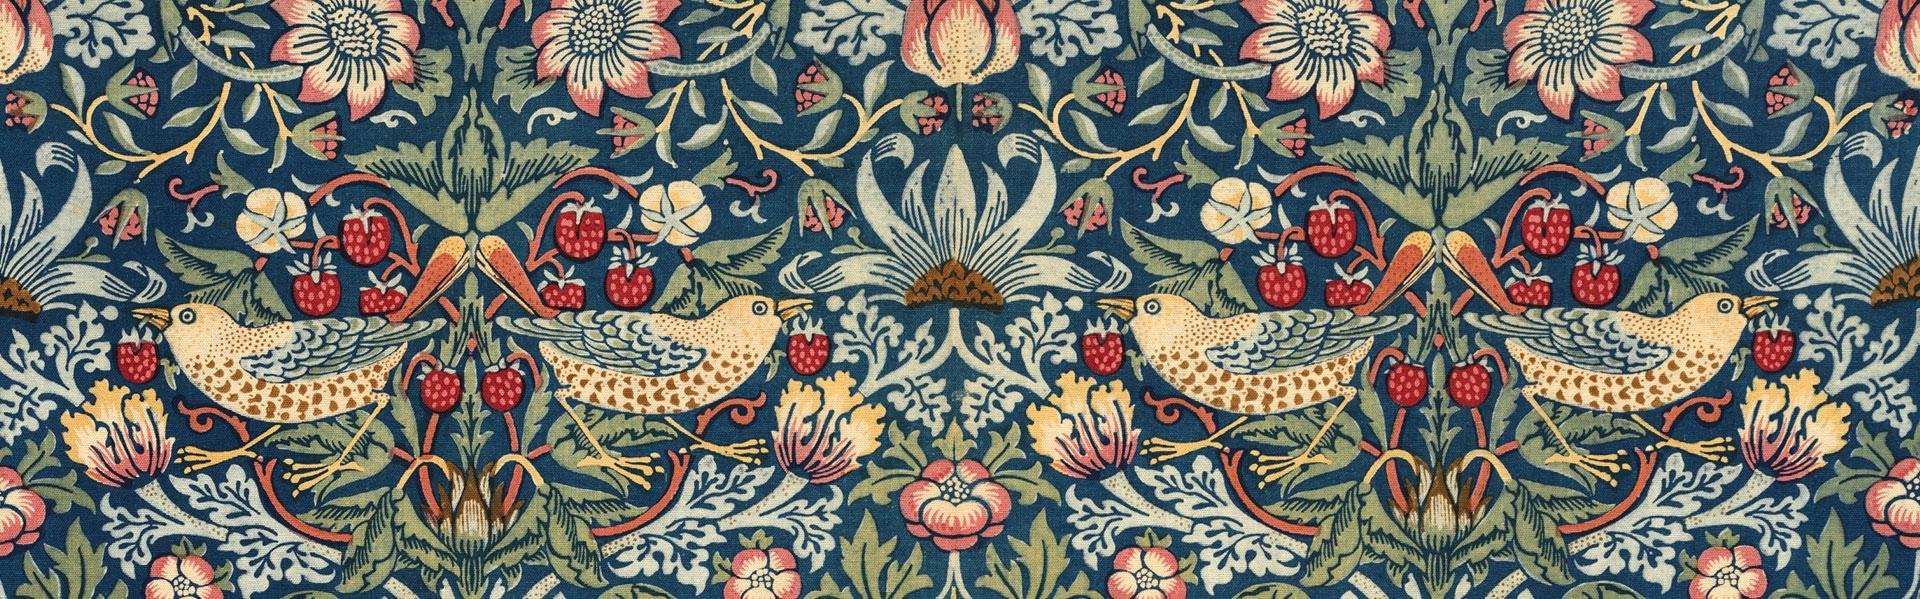 William Morris wallpaper arts and crafts movement